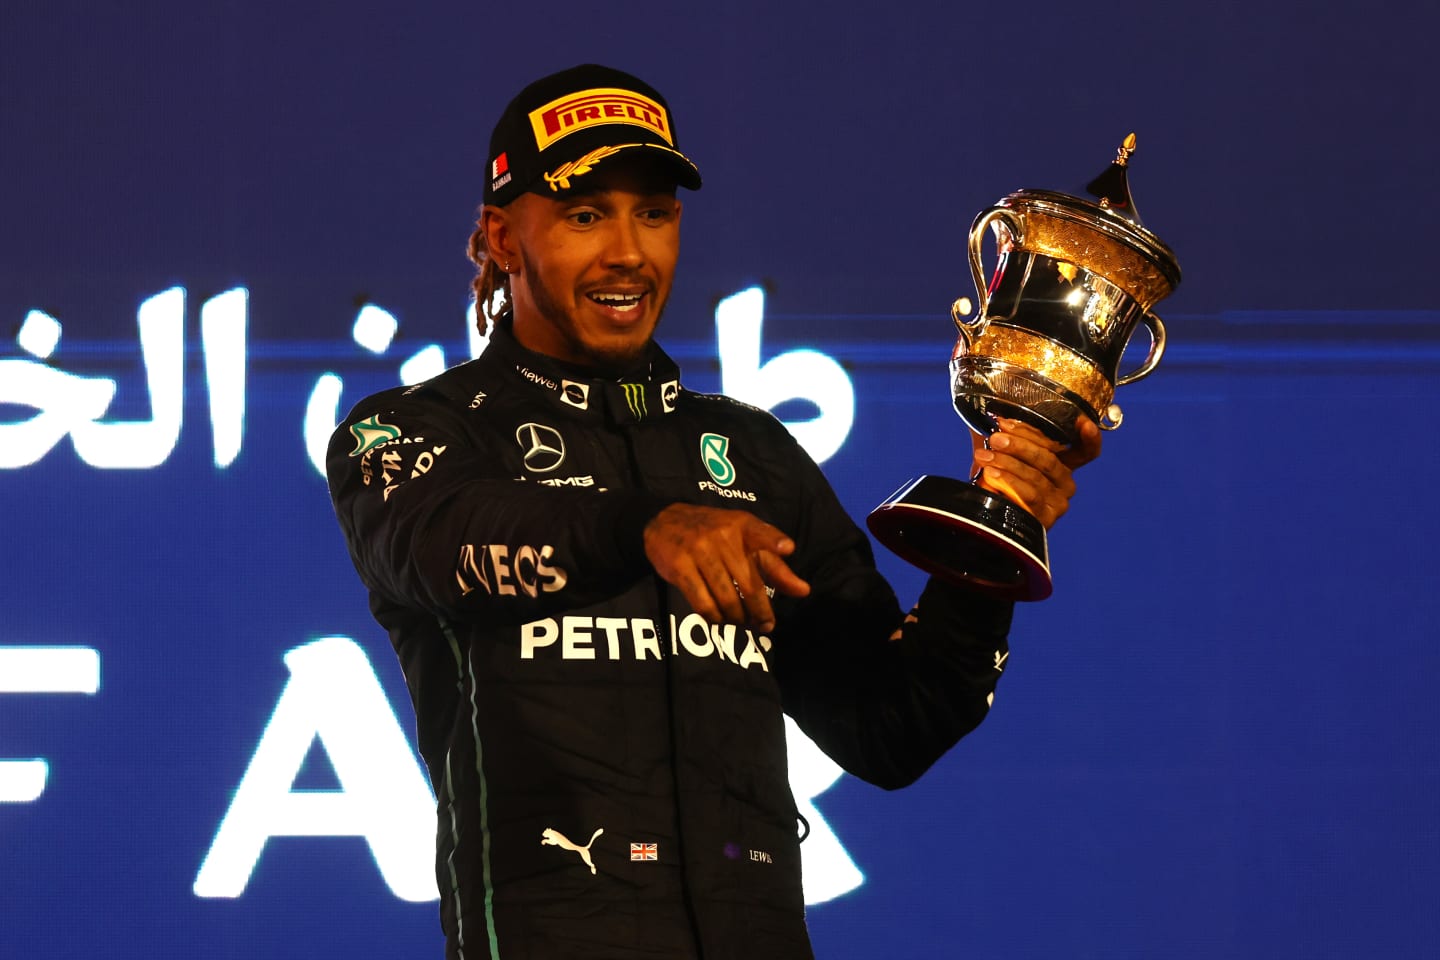 BAHRAIN, BAHRAIN - MARCH 20: Third placed Lewis Hamilton of Great Britain and Mercedes celebrates